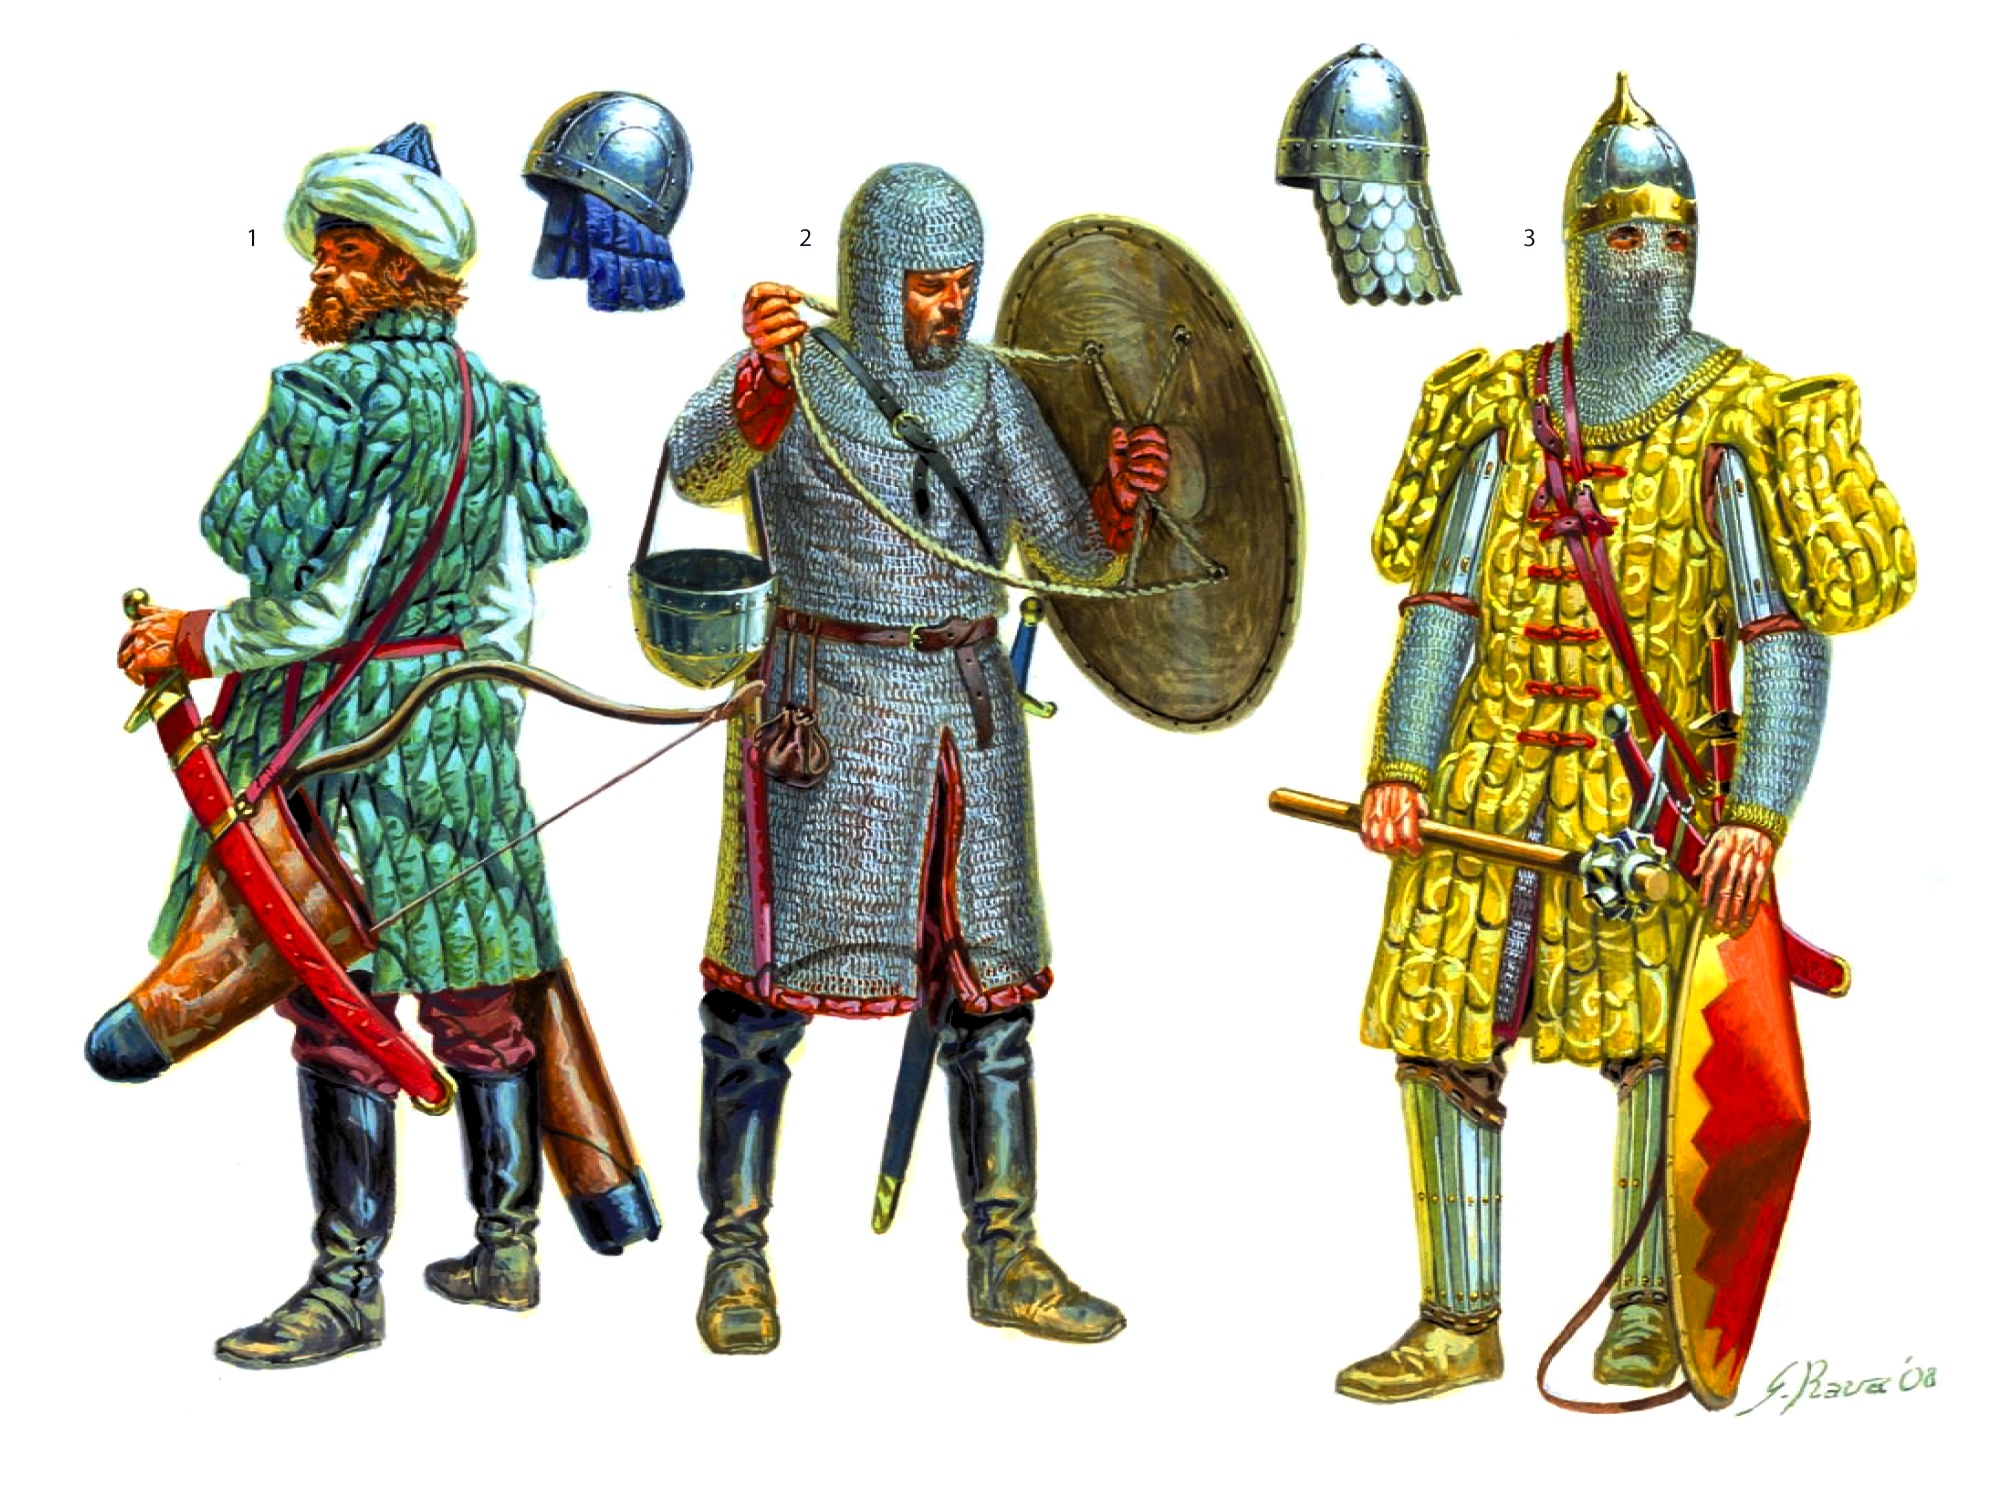 10 century. Византийская армия 15 века. Византийская армия 10 век. Византийский катафракт 10 век. Византийский воин 13 век.